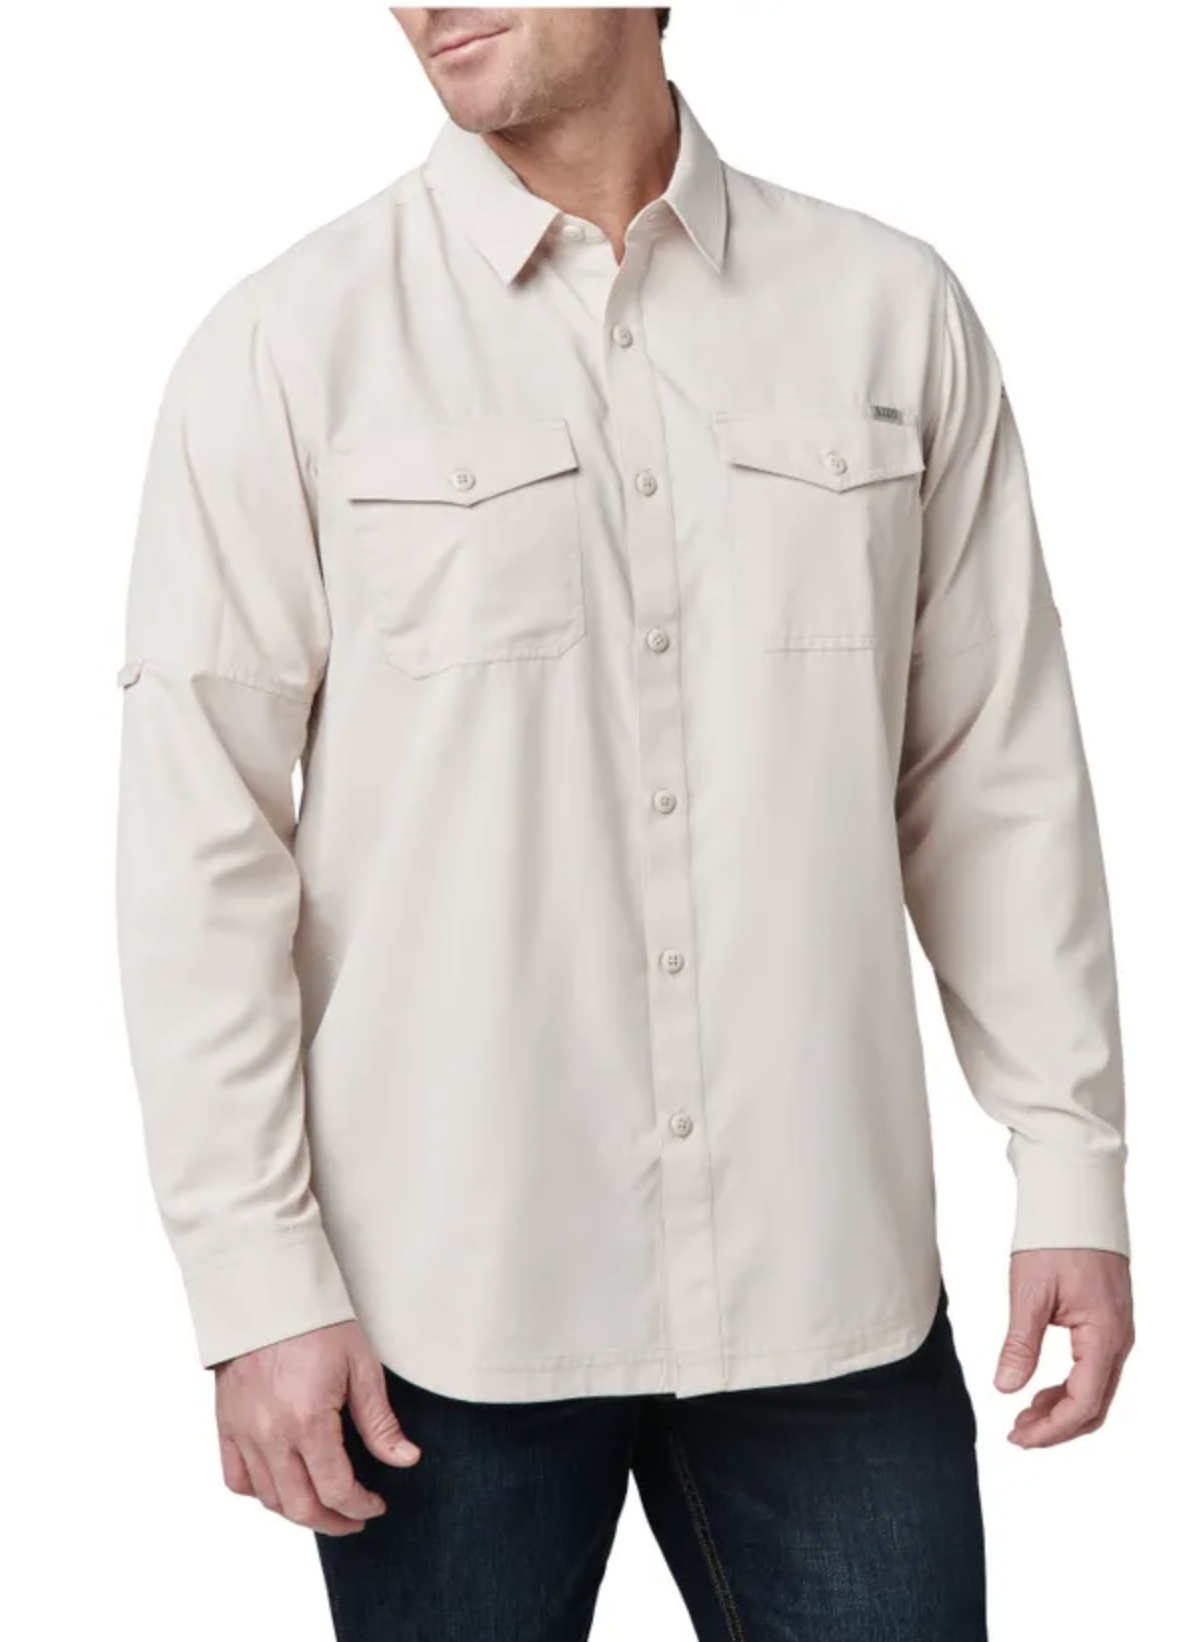 5.11 - Marksman Long Sleeve Shirt UPF 50+ - Sand Dune (344)